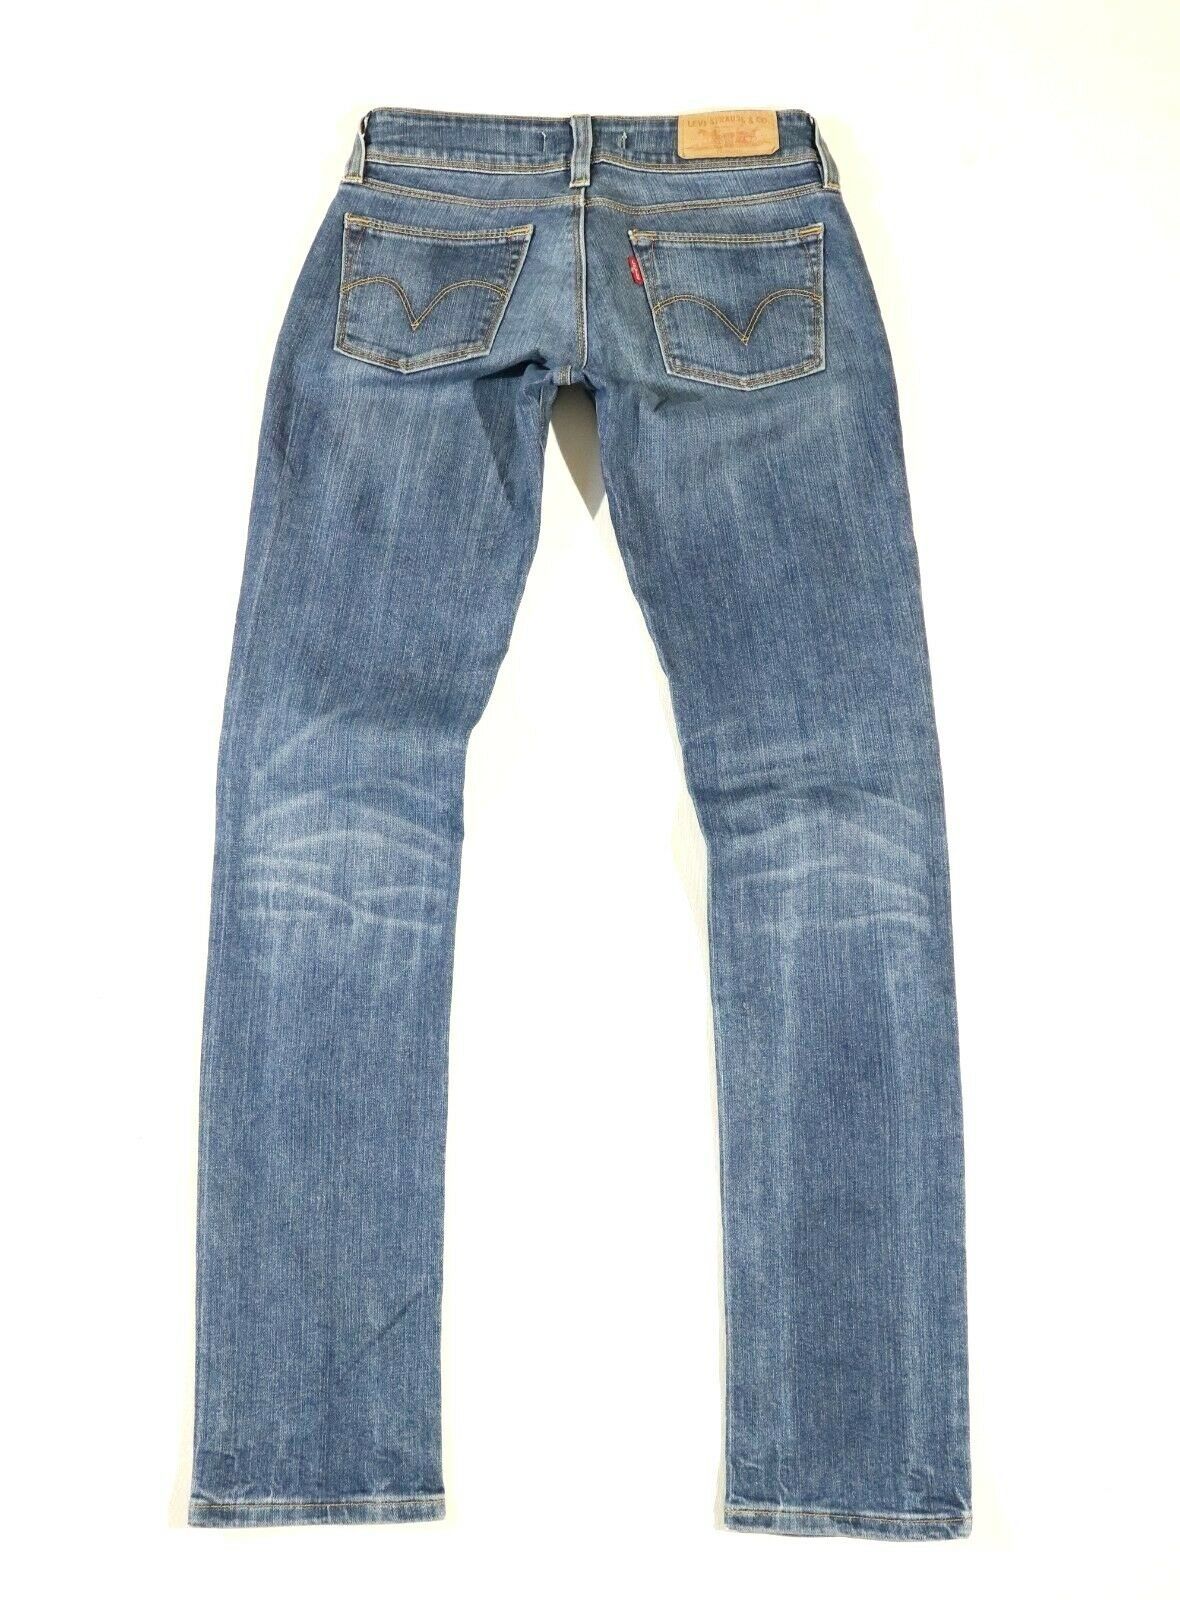 Women's Vintage LEVI'S 571 Red Tab Slim Fit Stretch Blue Denim Jeans ...